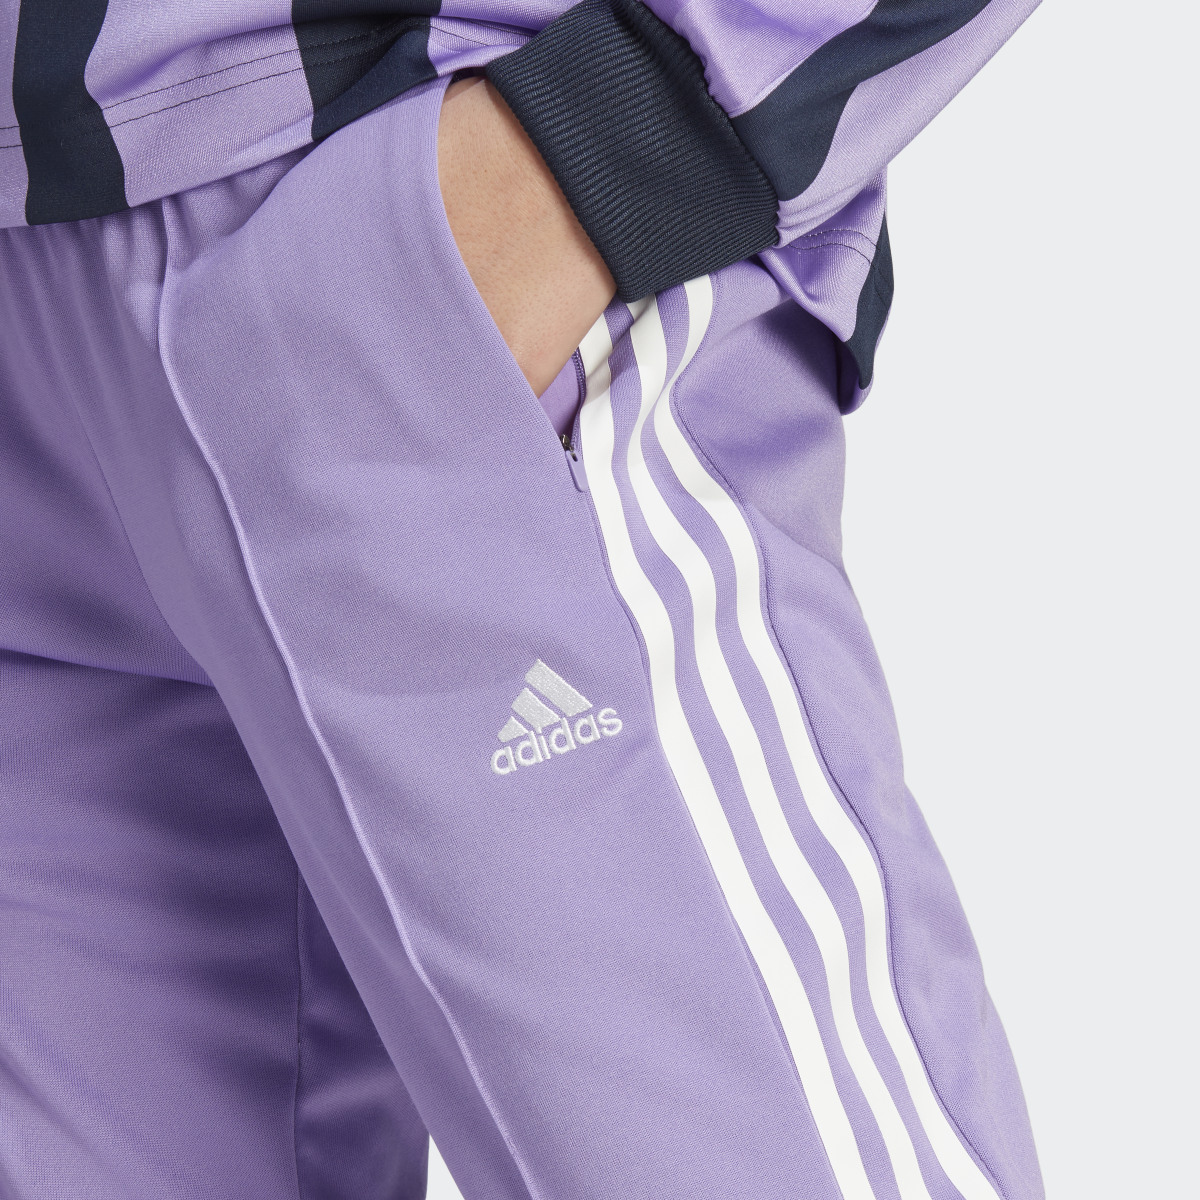 Adidas Tiro Suit Up Lifestyle Track Pants. 5